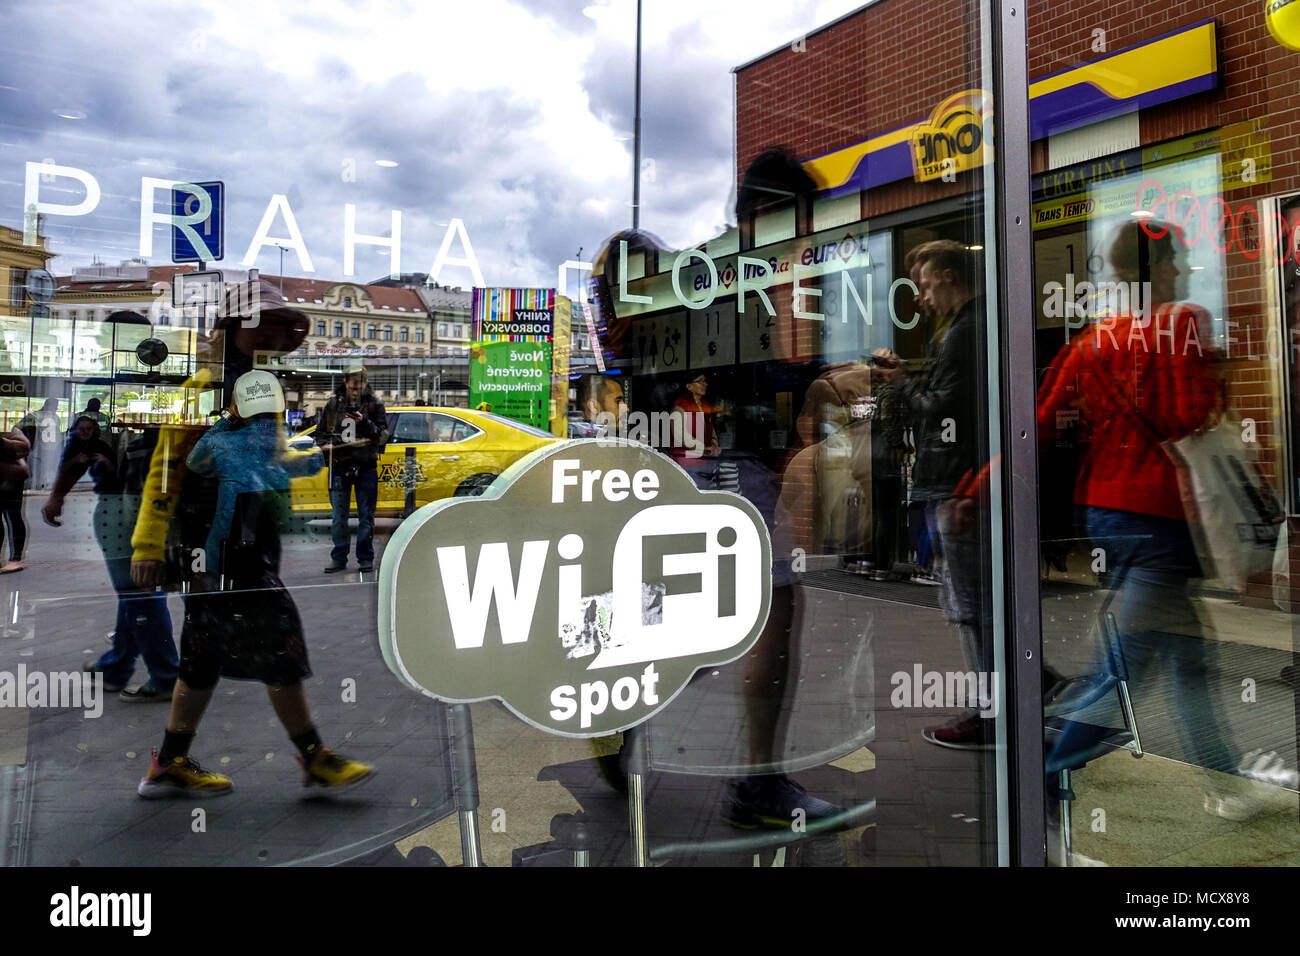 Prague Florenc Bus Station reflection on a glass door, Free Wi Fi spot logo, Czech Republic Stock Photo